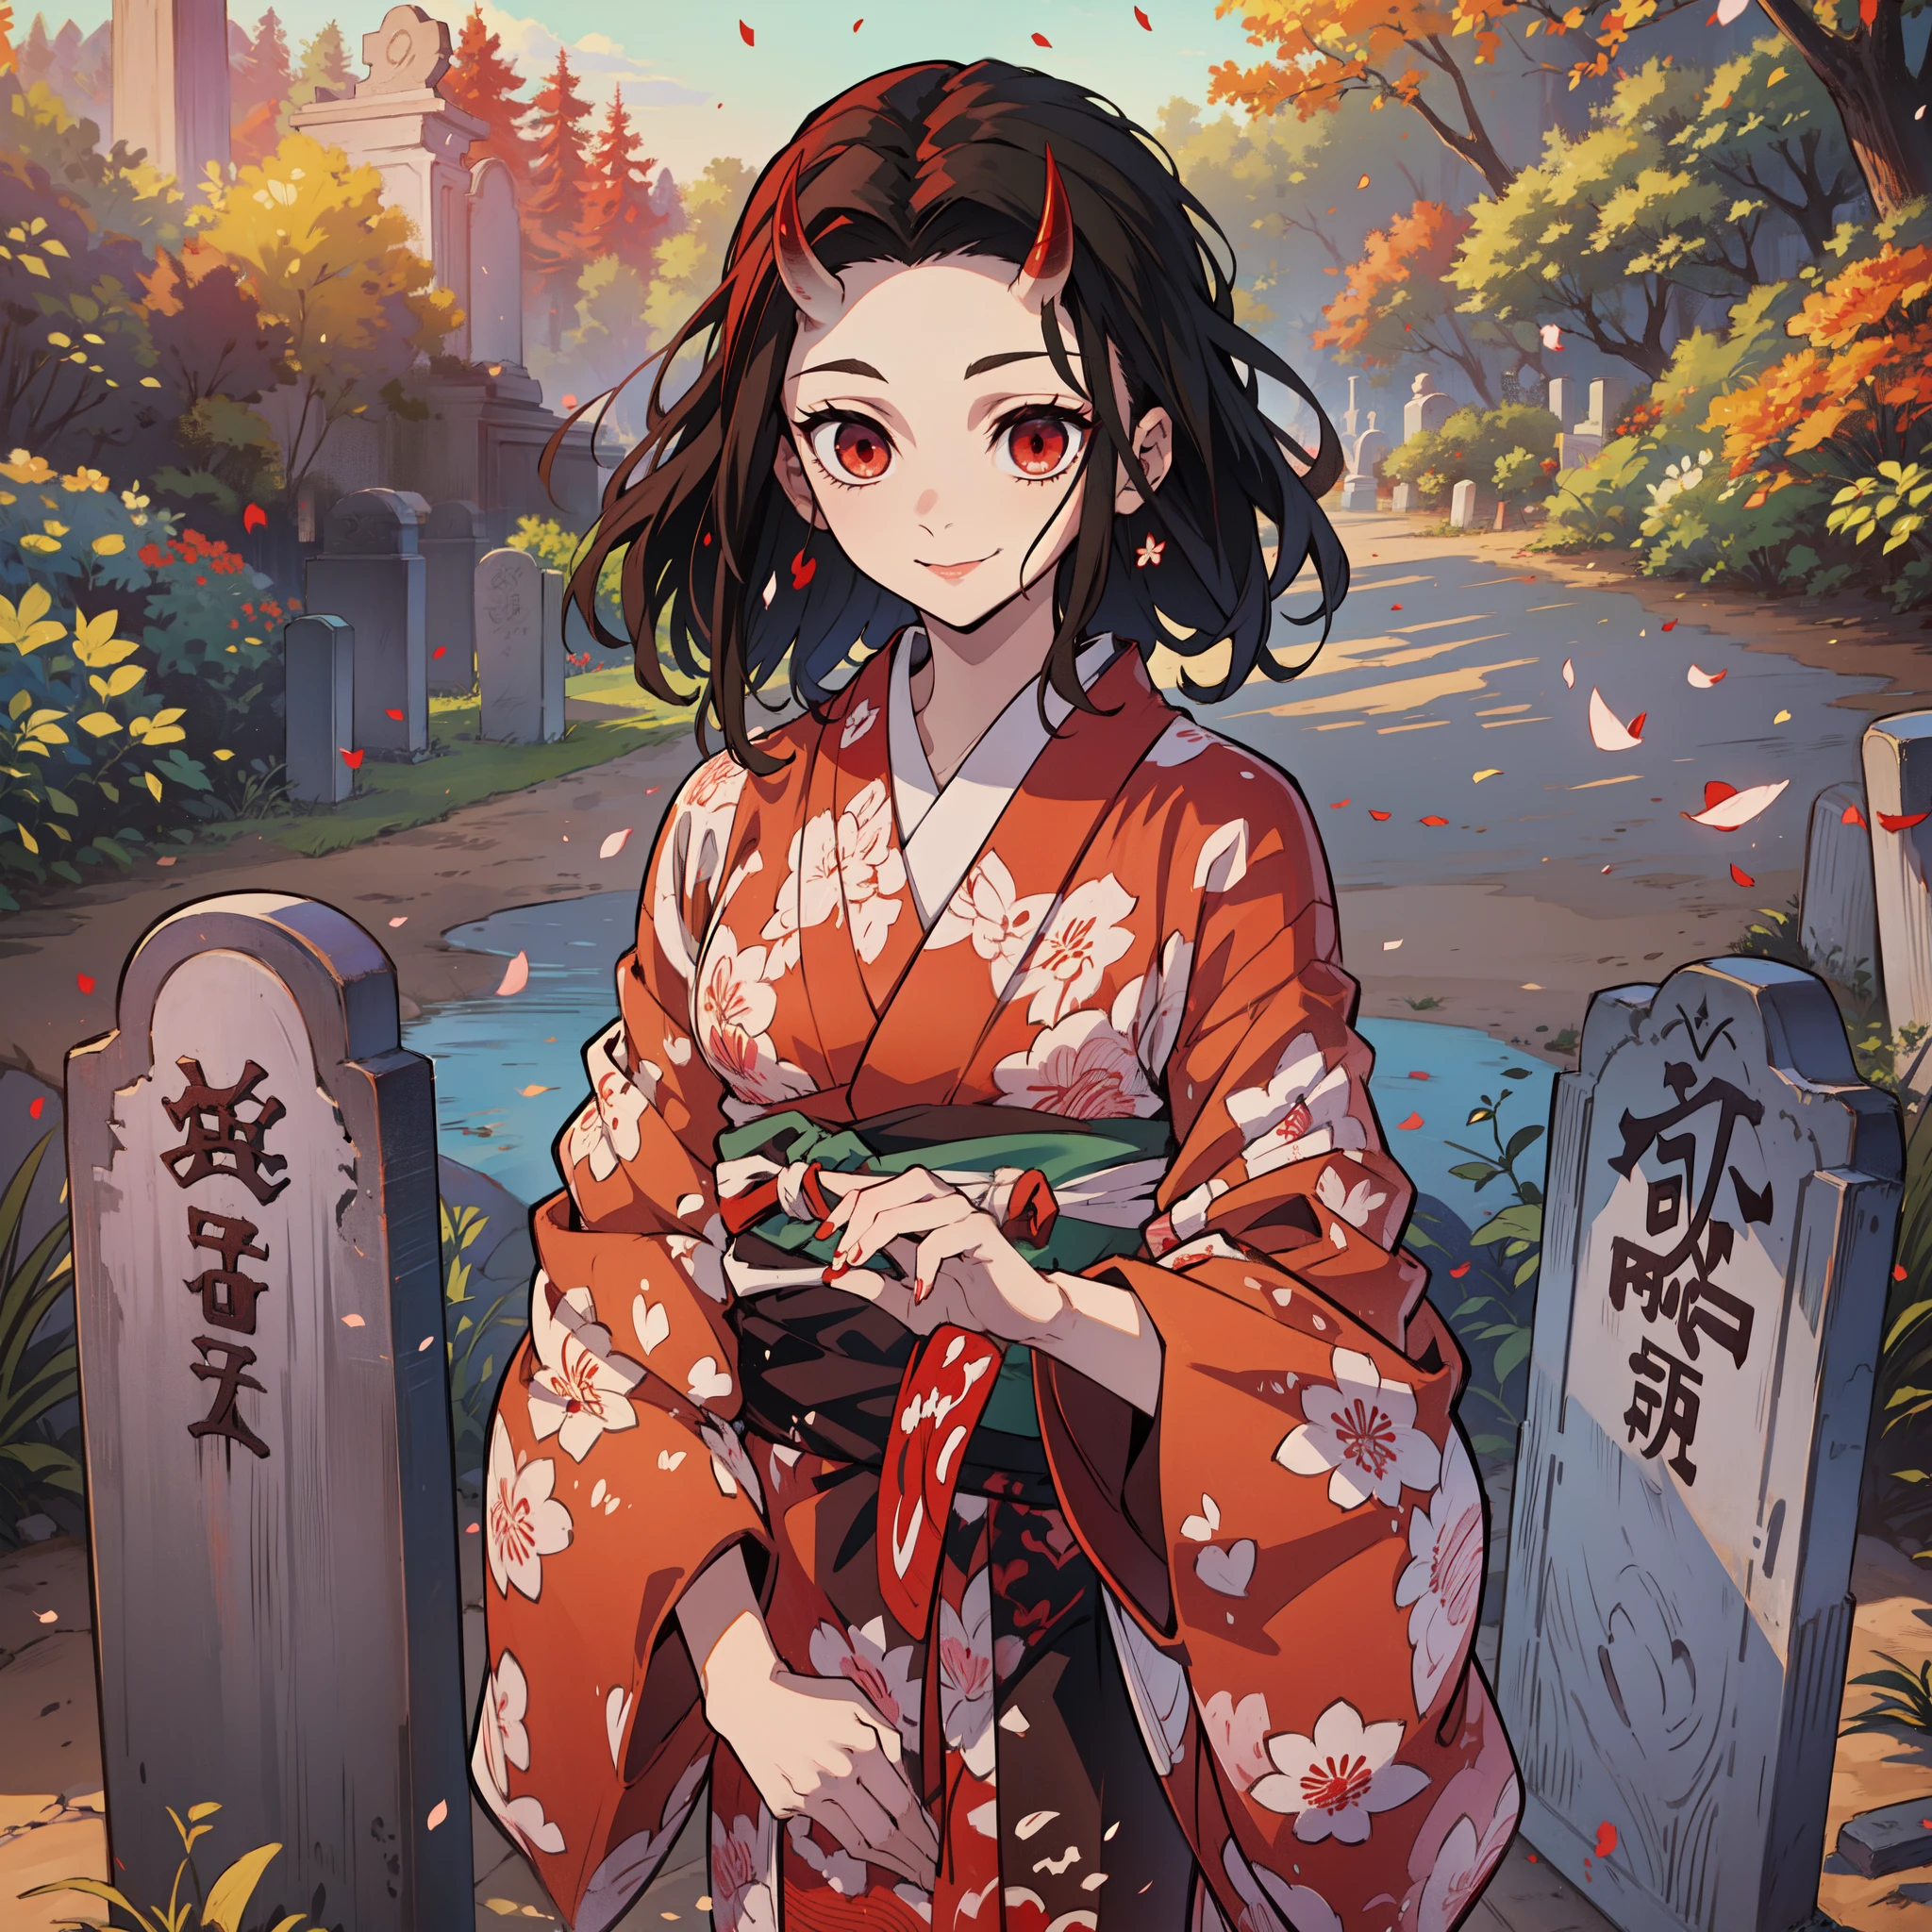 (Mesa, mejor calidad:1.2), estilo kimetsu no yaiba, Kamado Nezuko, (1 chica en, Solo), 18 años, Pelo negro ondulado, (cuernos de demonio rojo:1.5), ojos rojos, kimono rosa, sonrisa maligna, de un lado, (En la tumba, Lápida de estilo japonés), ver lápida